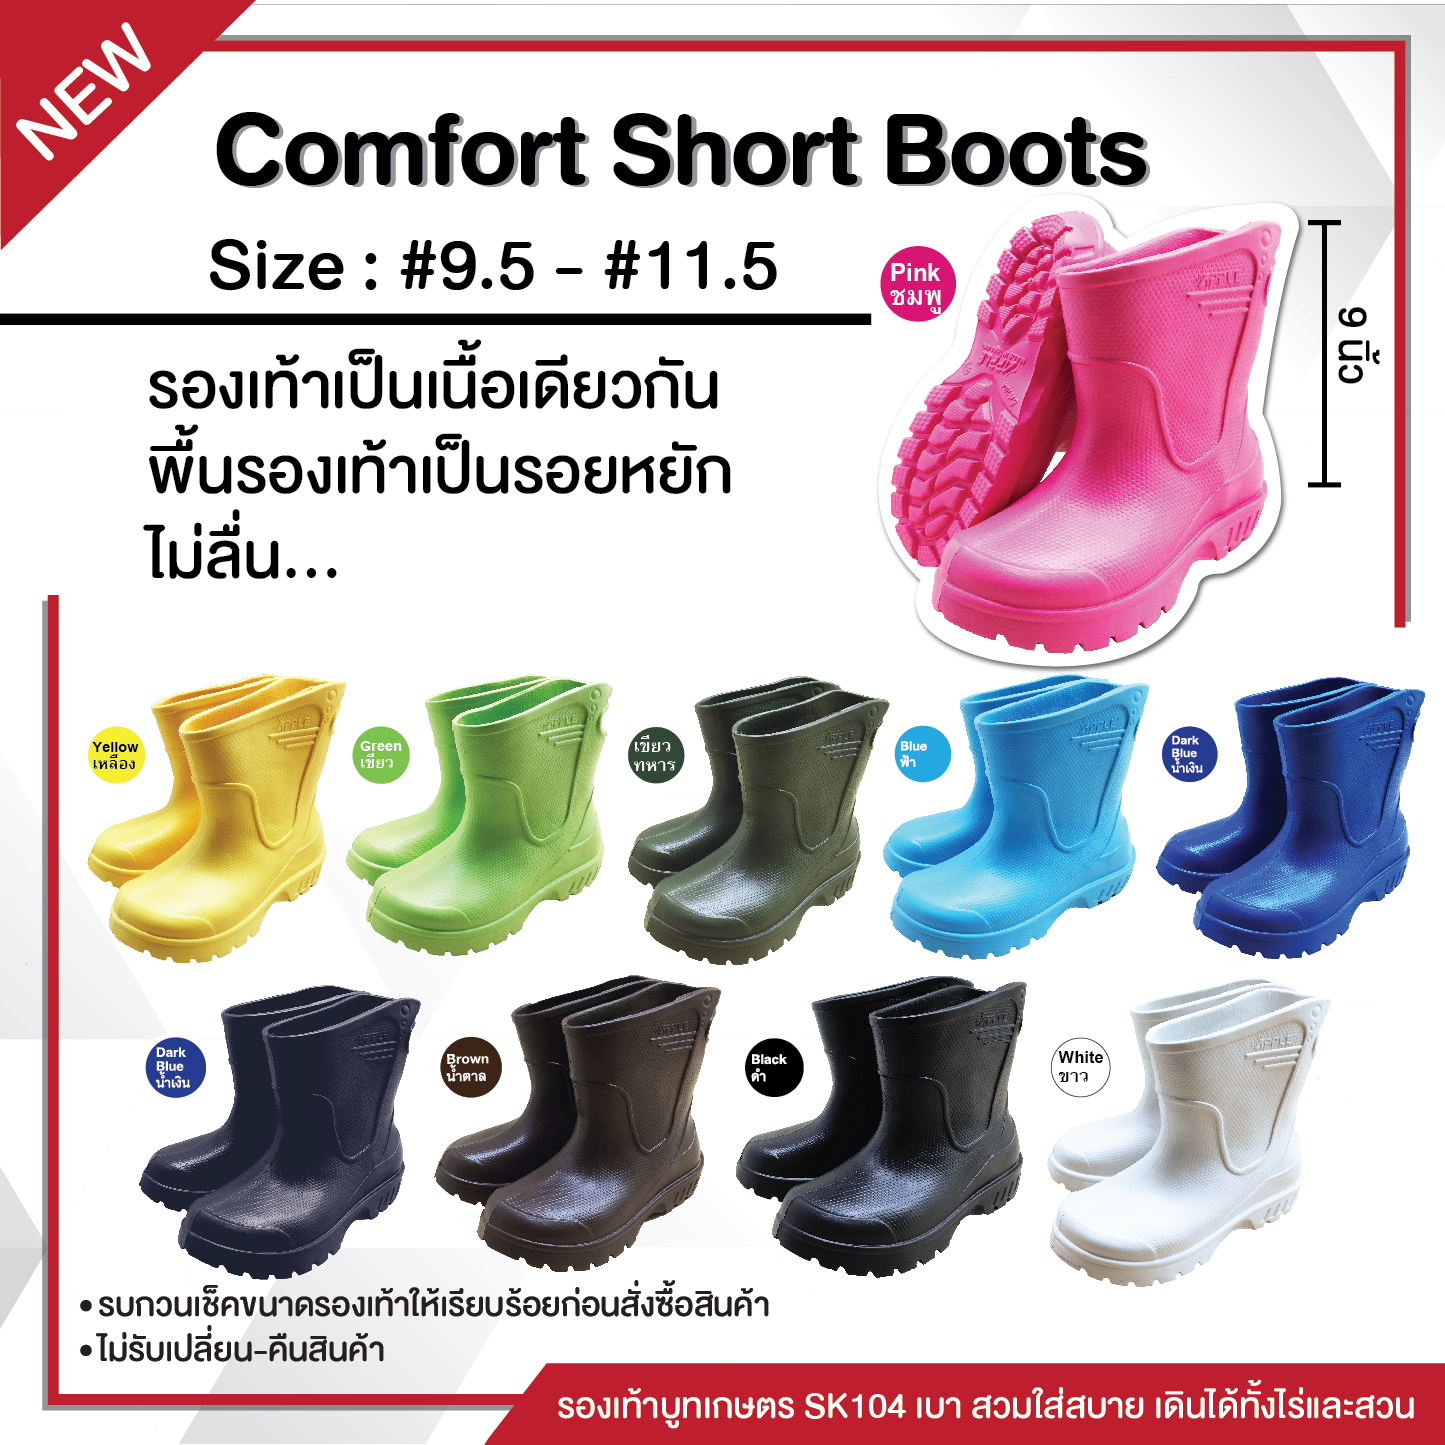 Comfort Short Boots รองเท้าบู๊ท #9.5-#11.5 สูง 9 นิ้ว